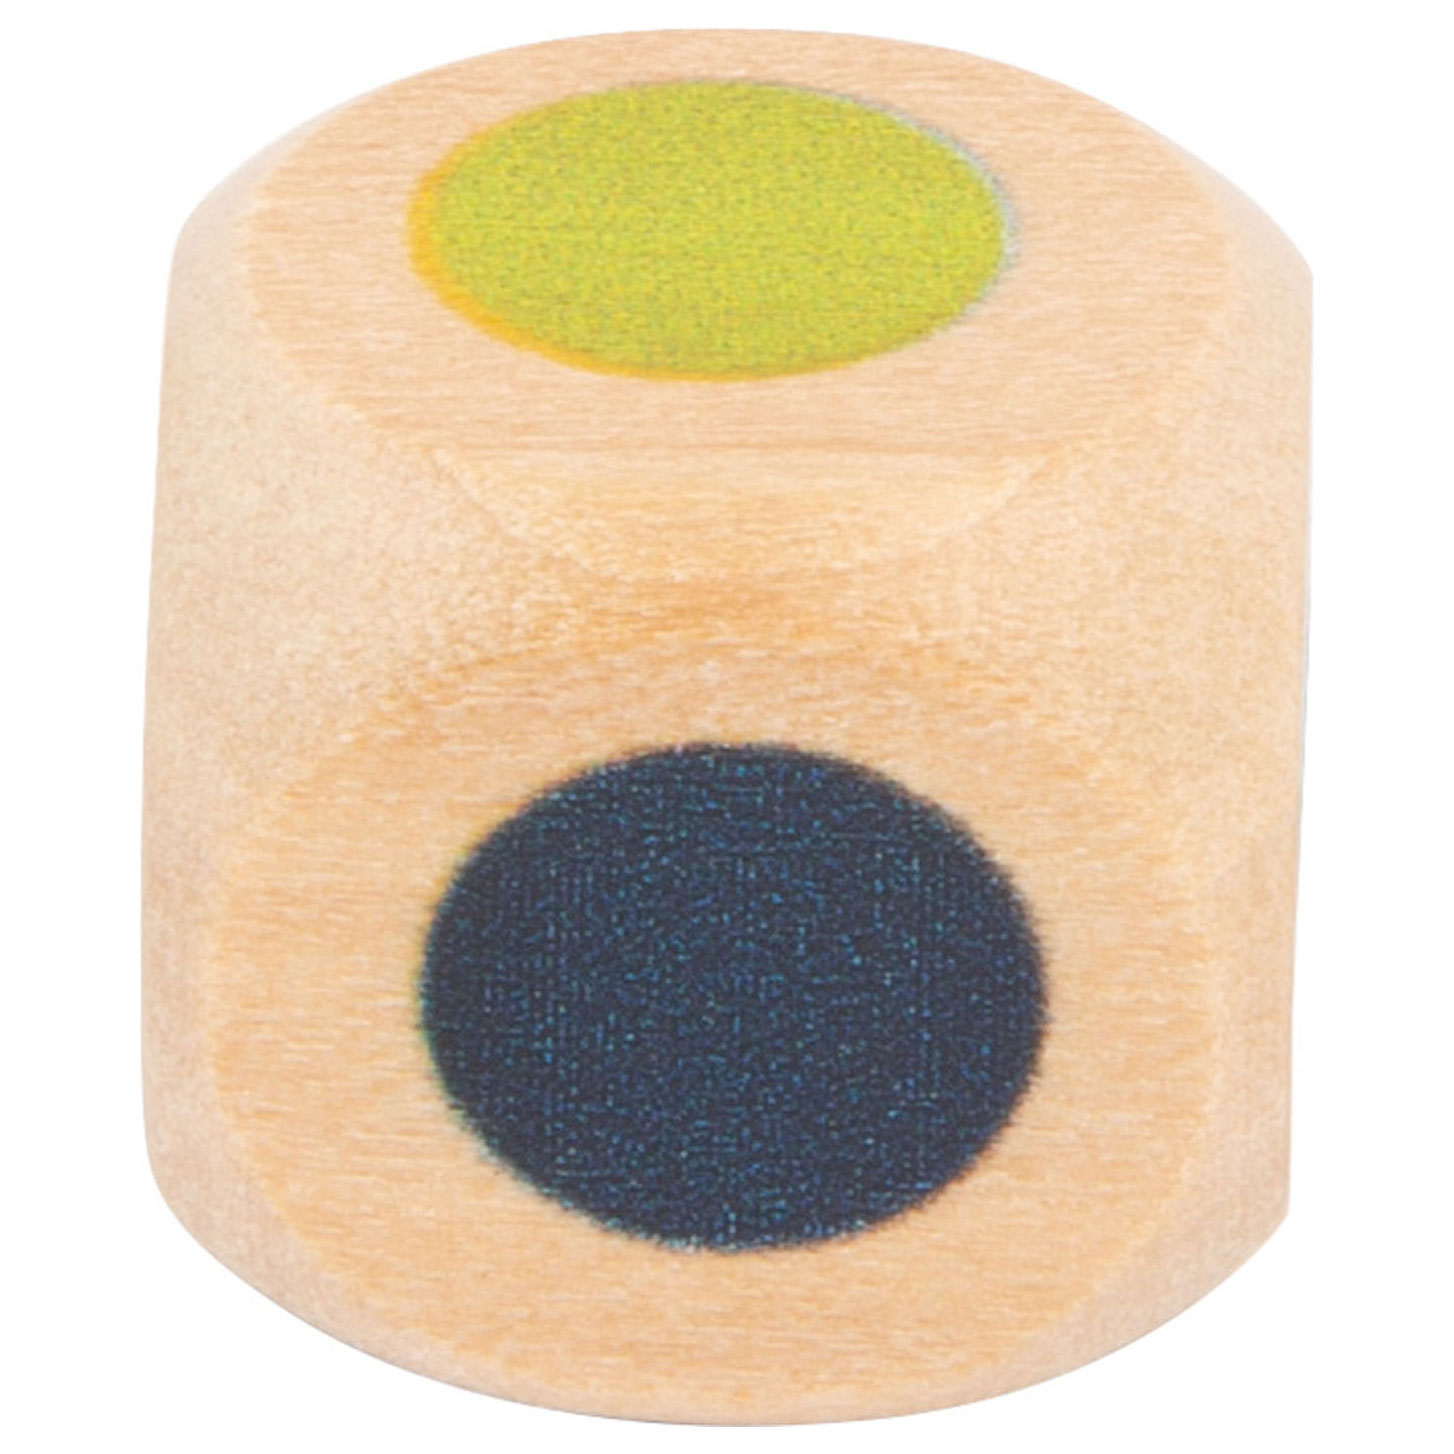 Small Foot – Farb-Memospiel aus Holz